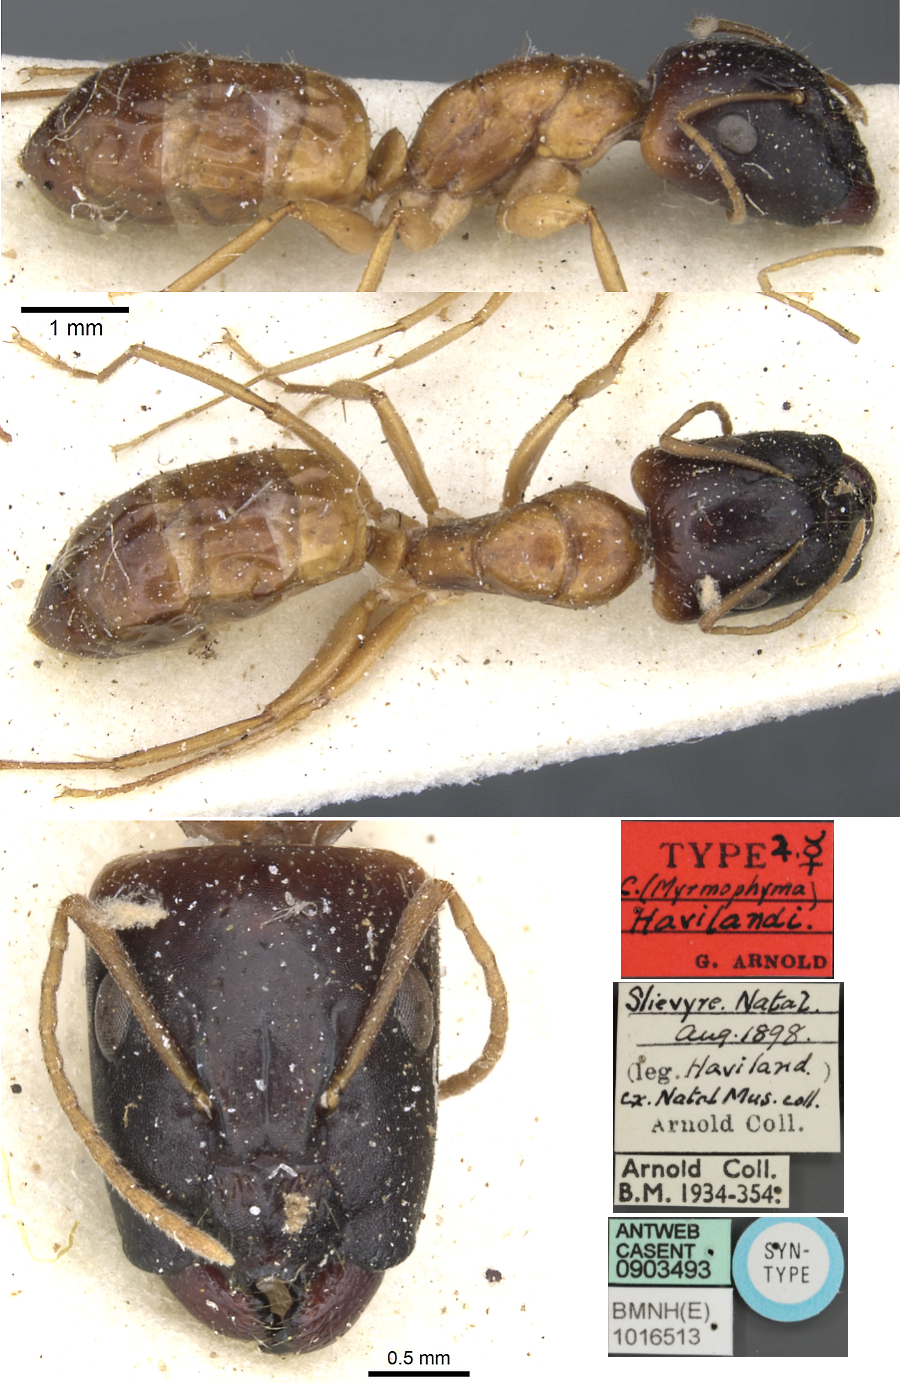 Camponotus havilandi major